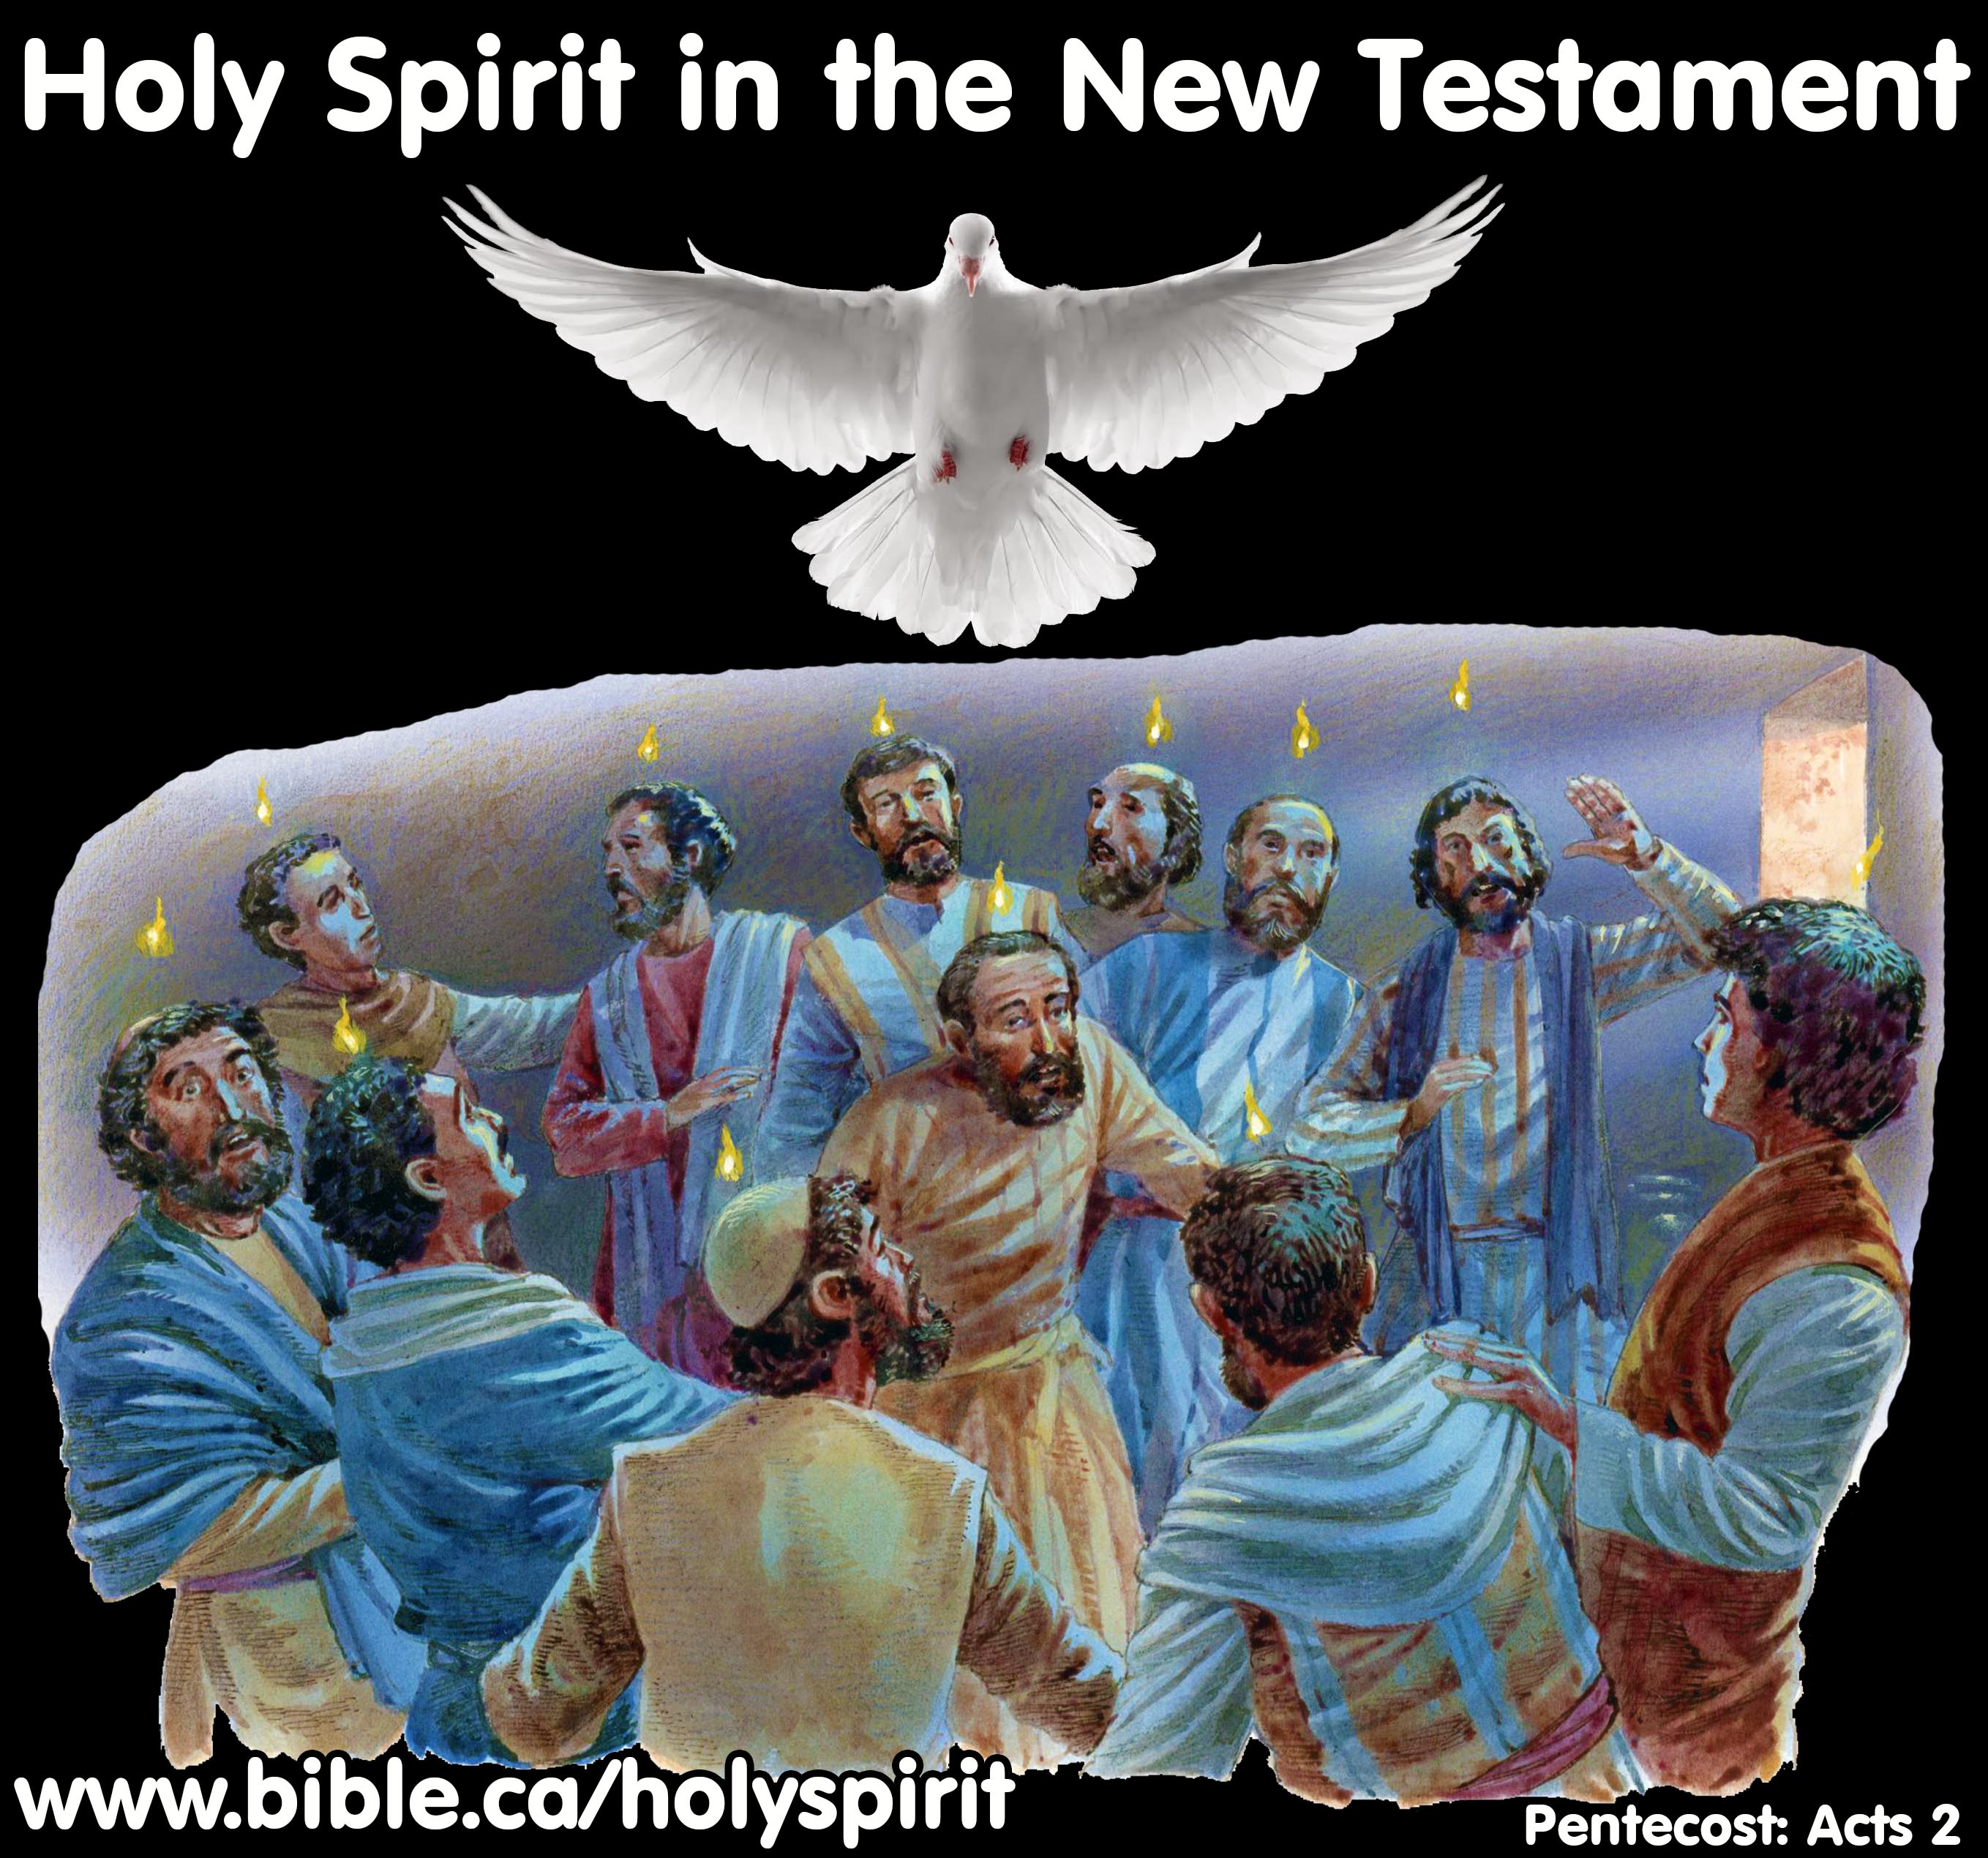 https://www.bible.ca/holyspirit/Holy-Spirit-in-the-New-Testament-Pentecost-tongues-fire-dove.jpg